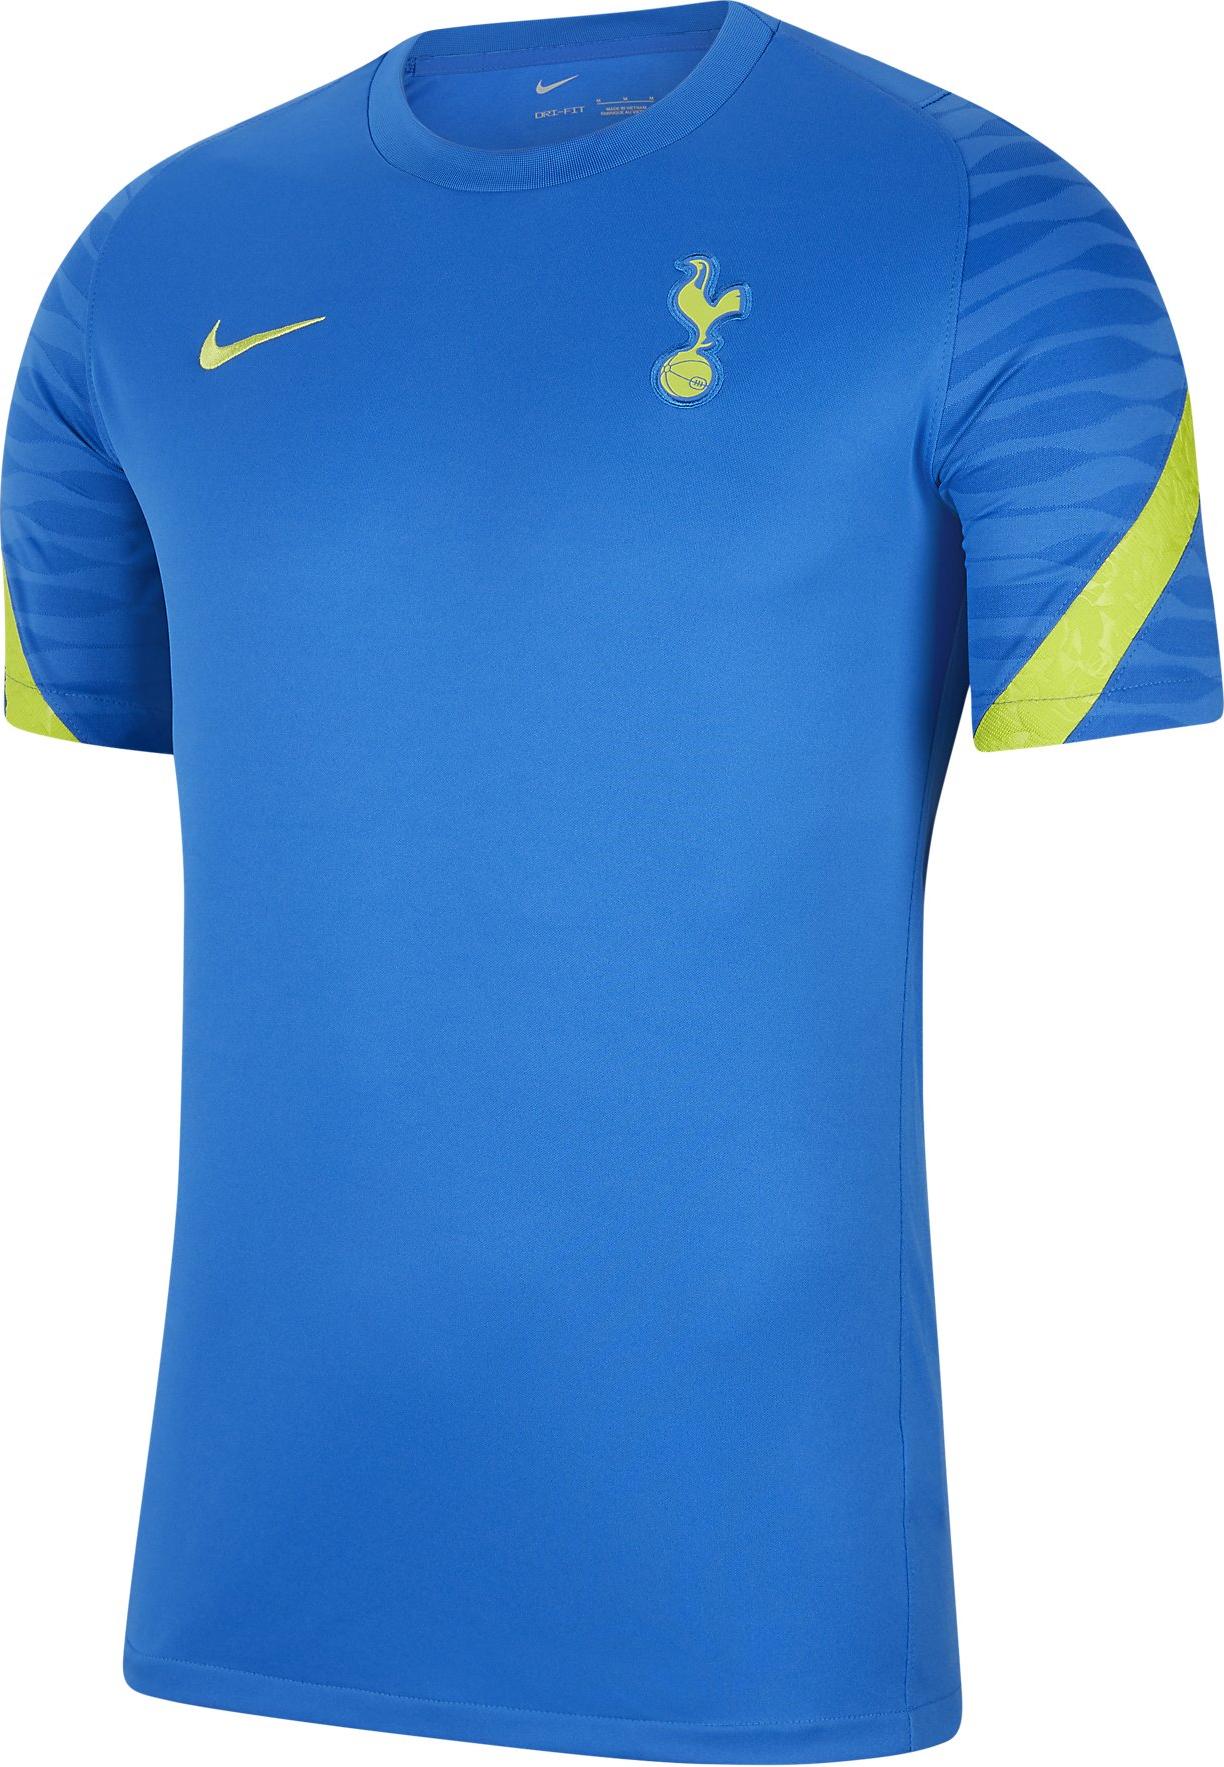 T-shirt Nike Tottenham Hotspur Strike Men s Short-Sleeve Soccer Top